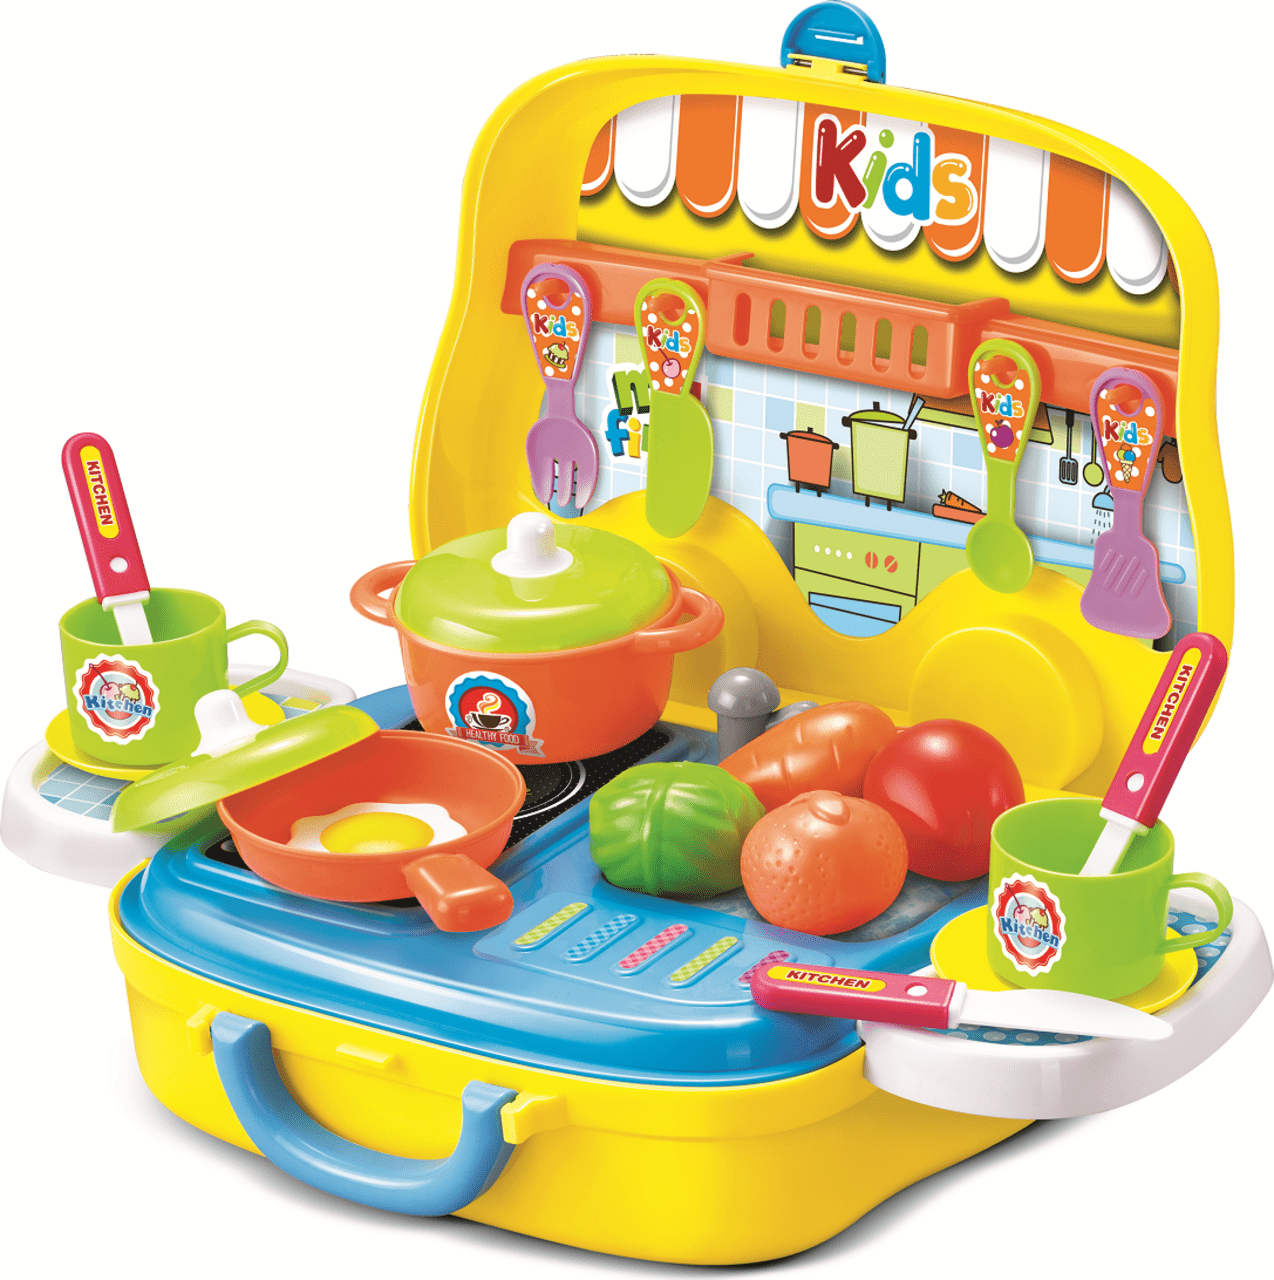 Детские наборы в чемоданчиках. Kitchen little Chef Set Xiong Cheng 008-966a Toys. Chef Kitchen Set набор. Набор кухня в чемоданчике. Кухня чемодан для детей.